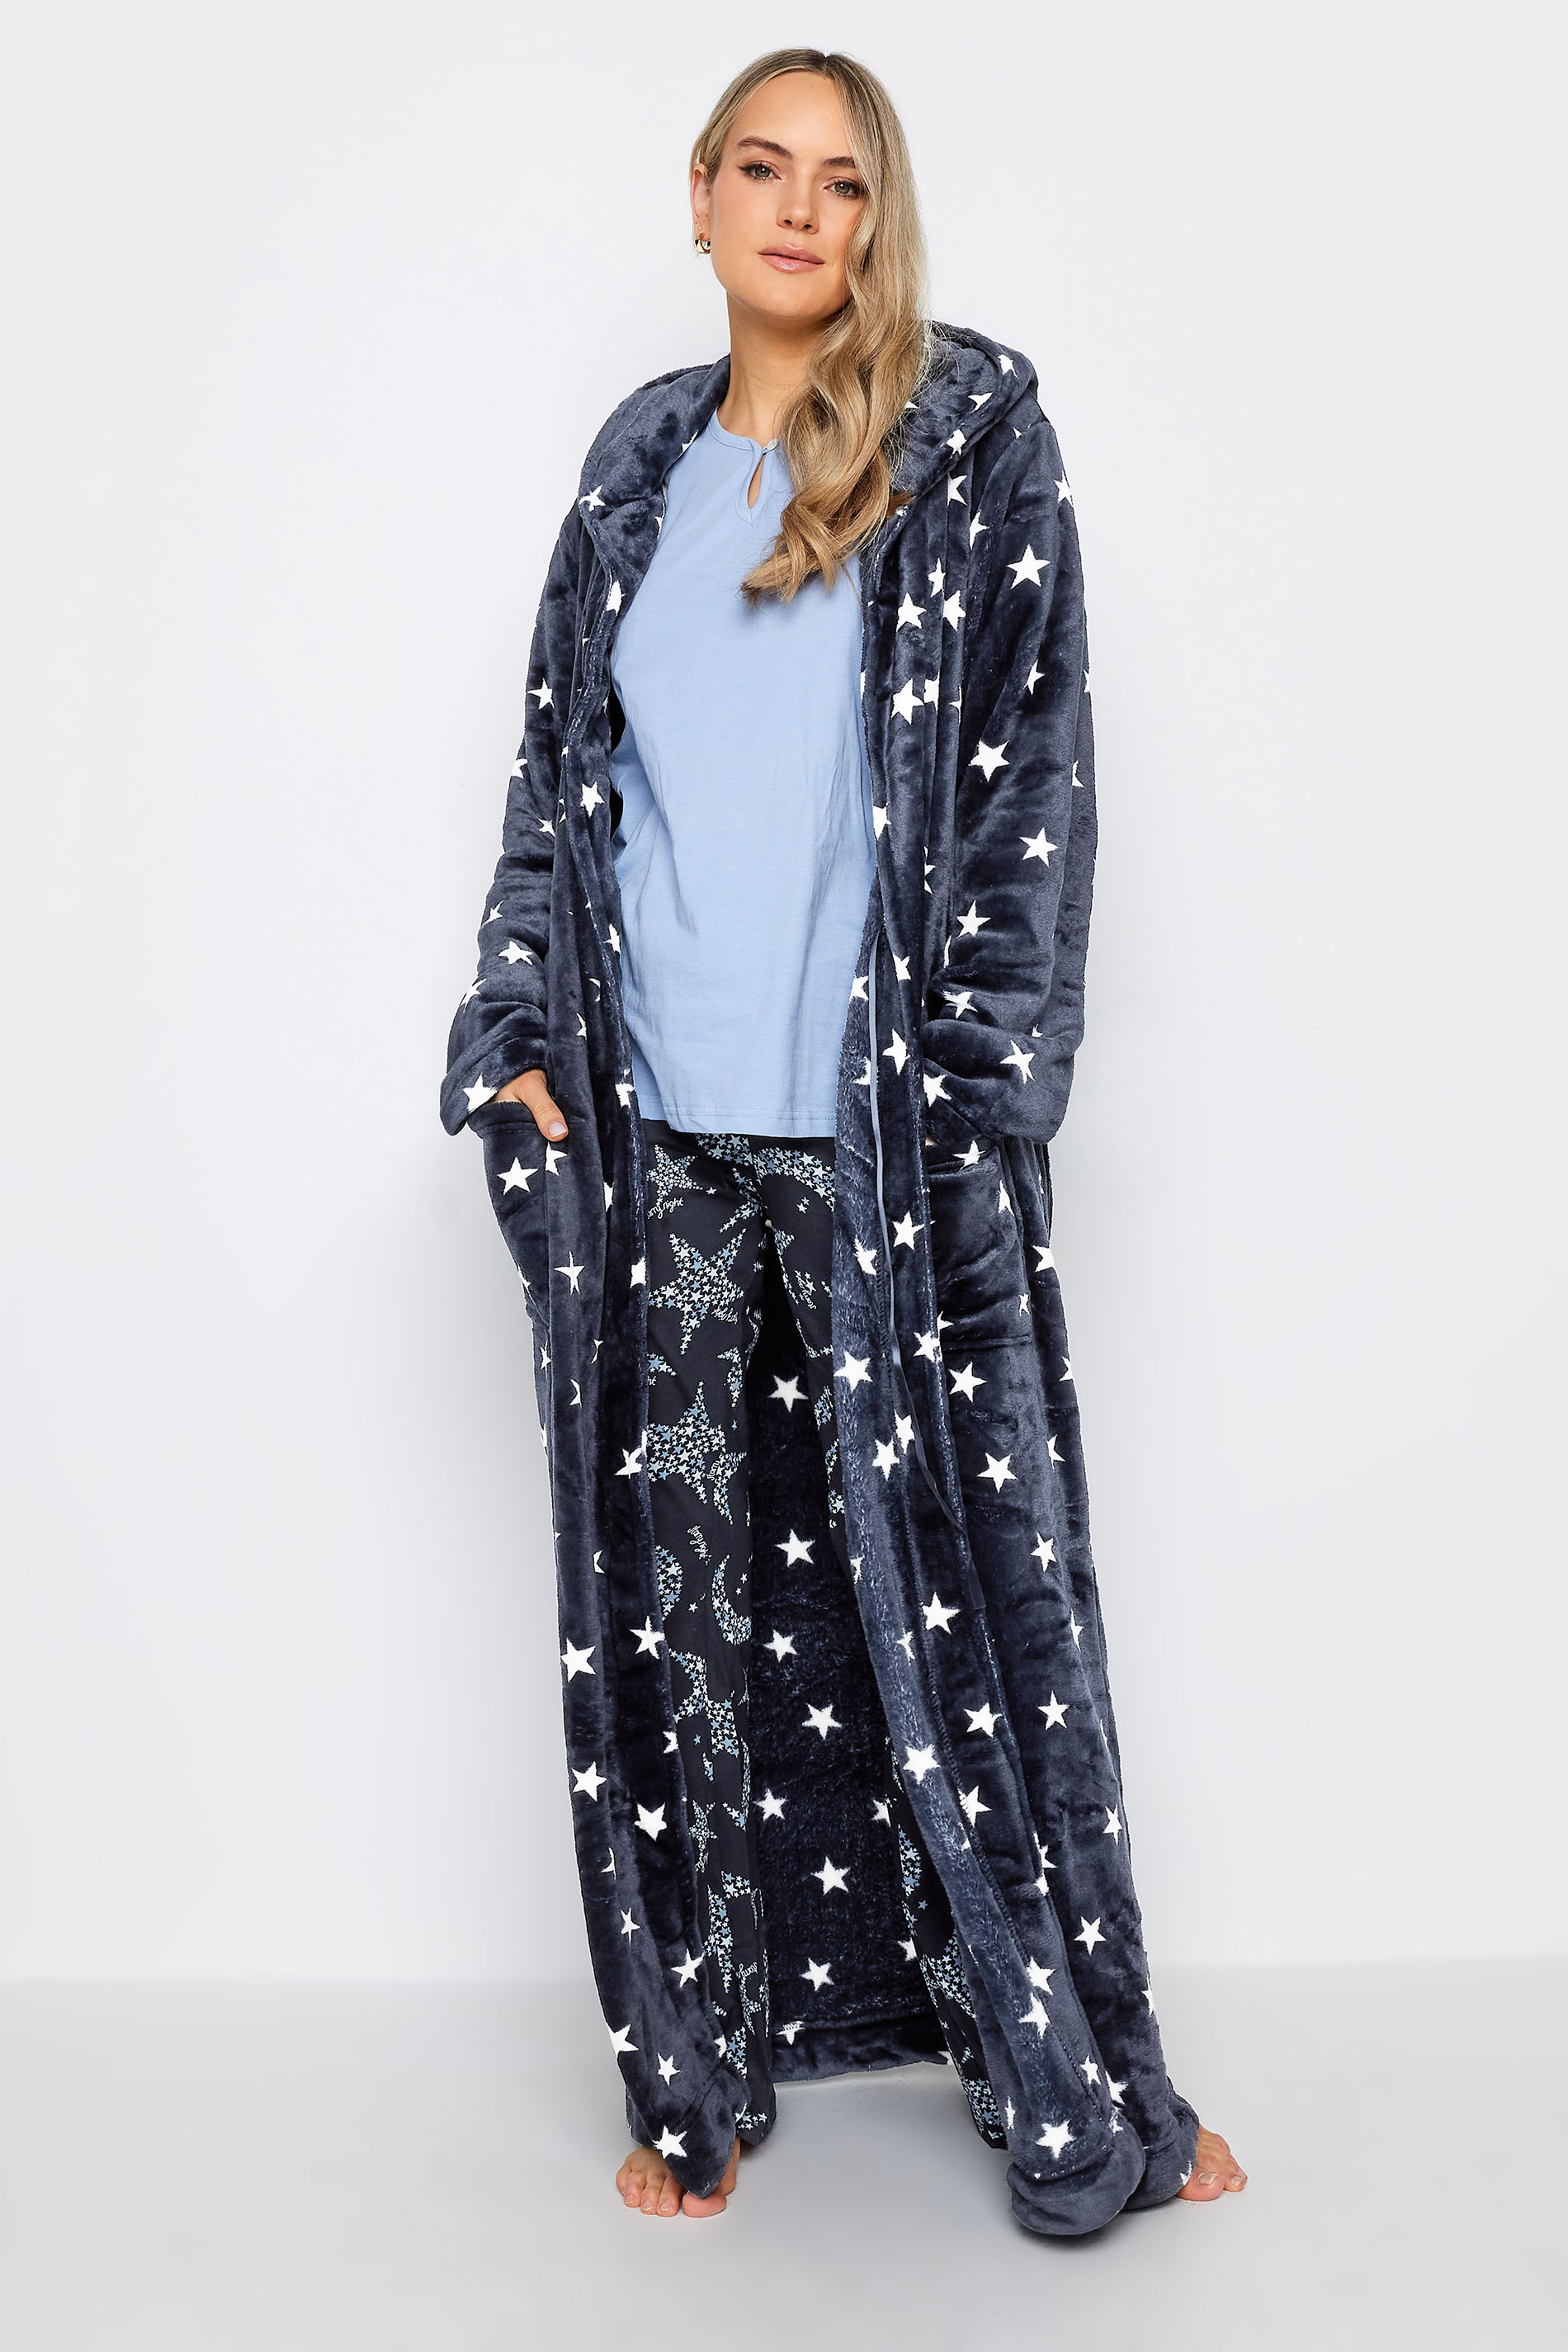 LTS Tall Women's Navy Blue Star Print Maxi Dressing Gown | Long Tall Sally 2